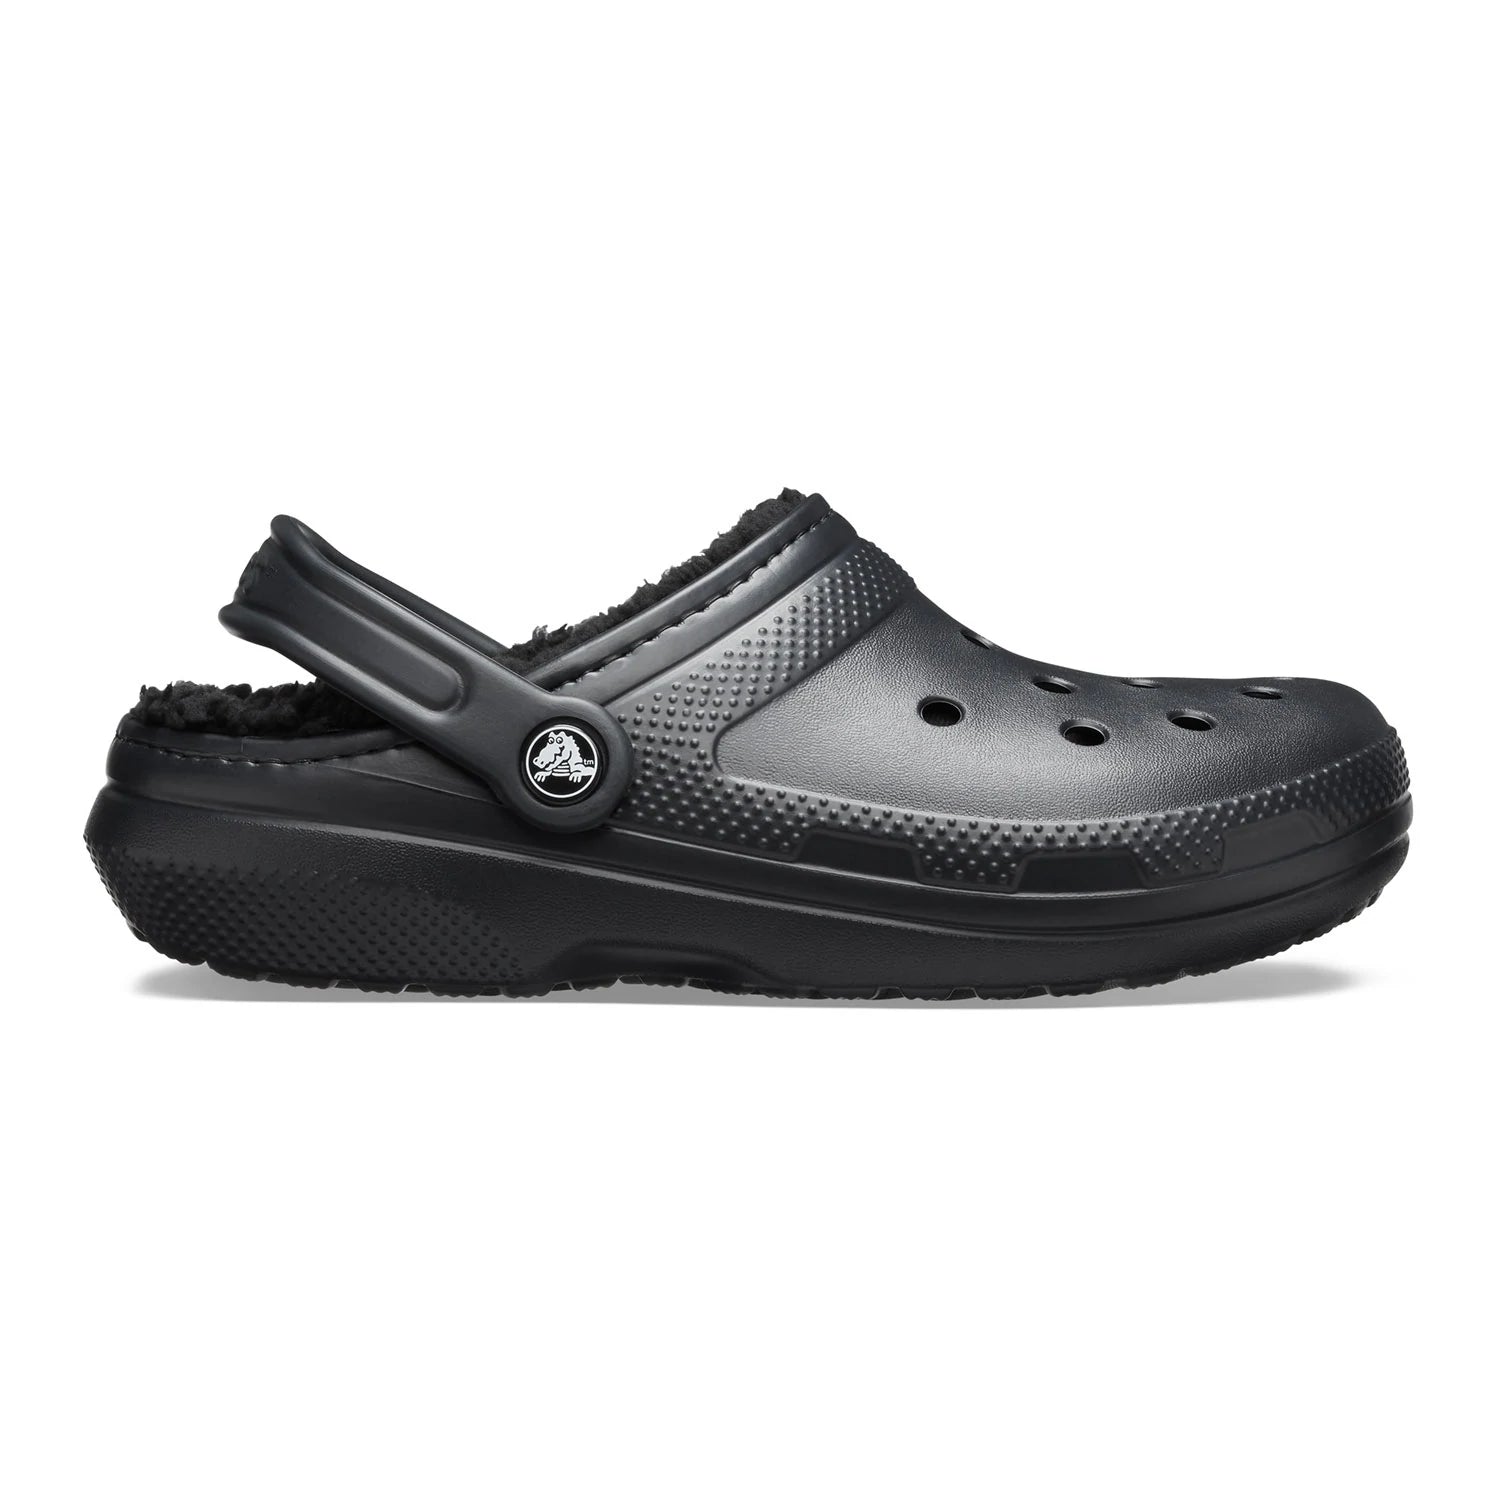 Crocs Unisex Classic Lined Clog Sandals